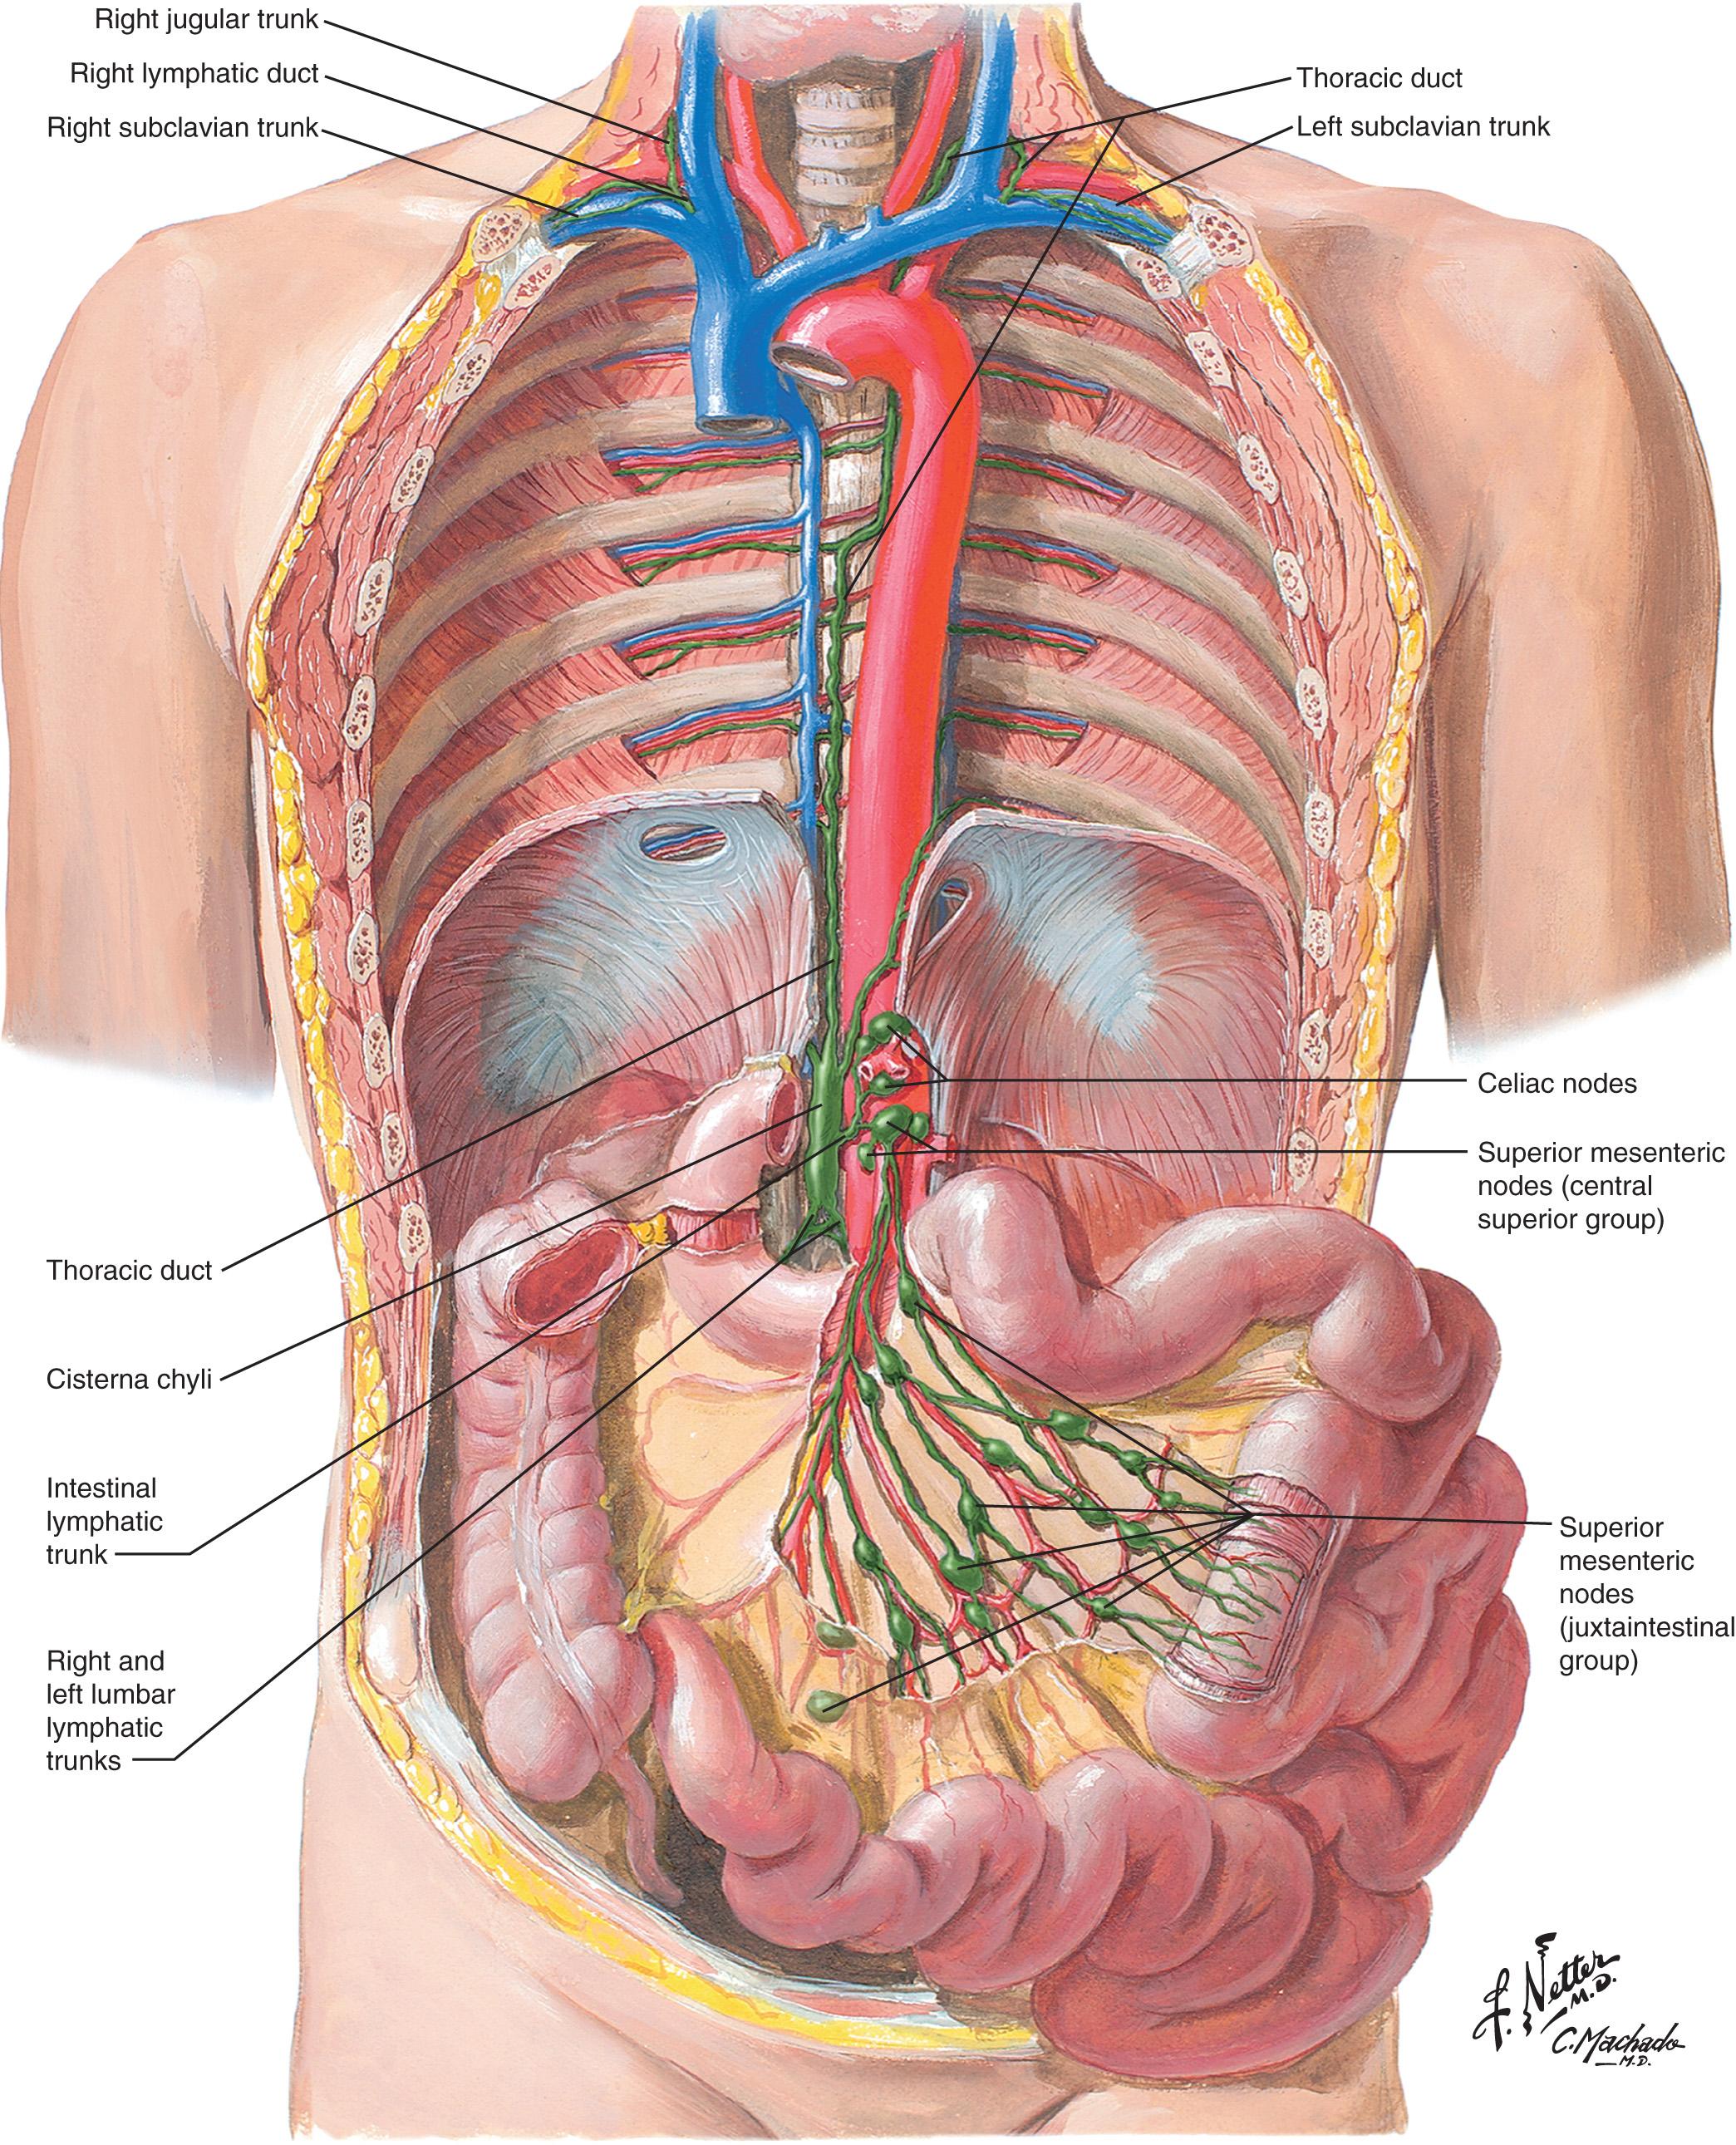 FIGURE 71.11, Lymphatic anatomy of the small intestine.